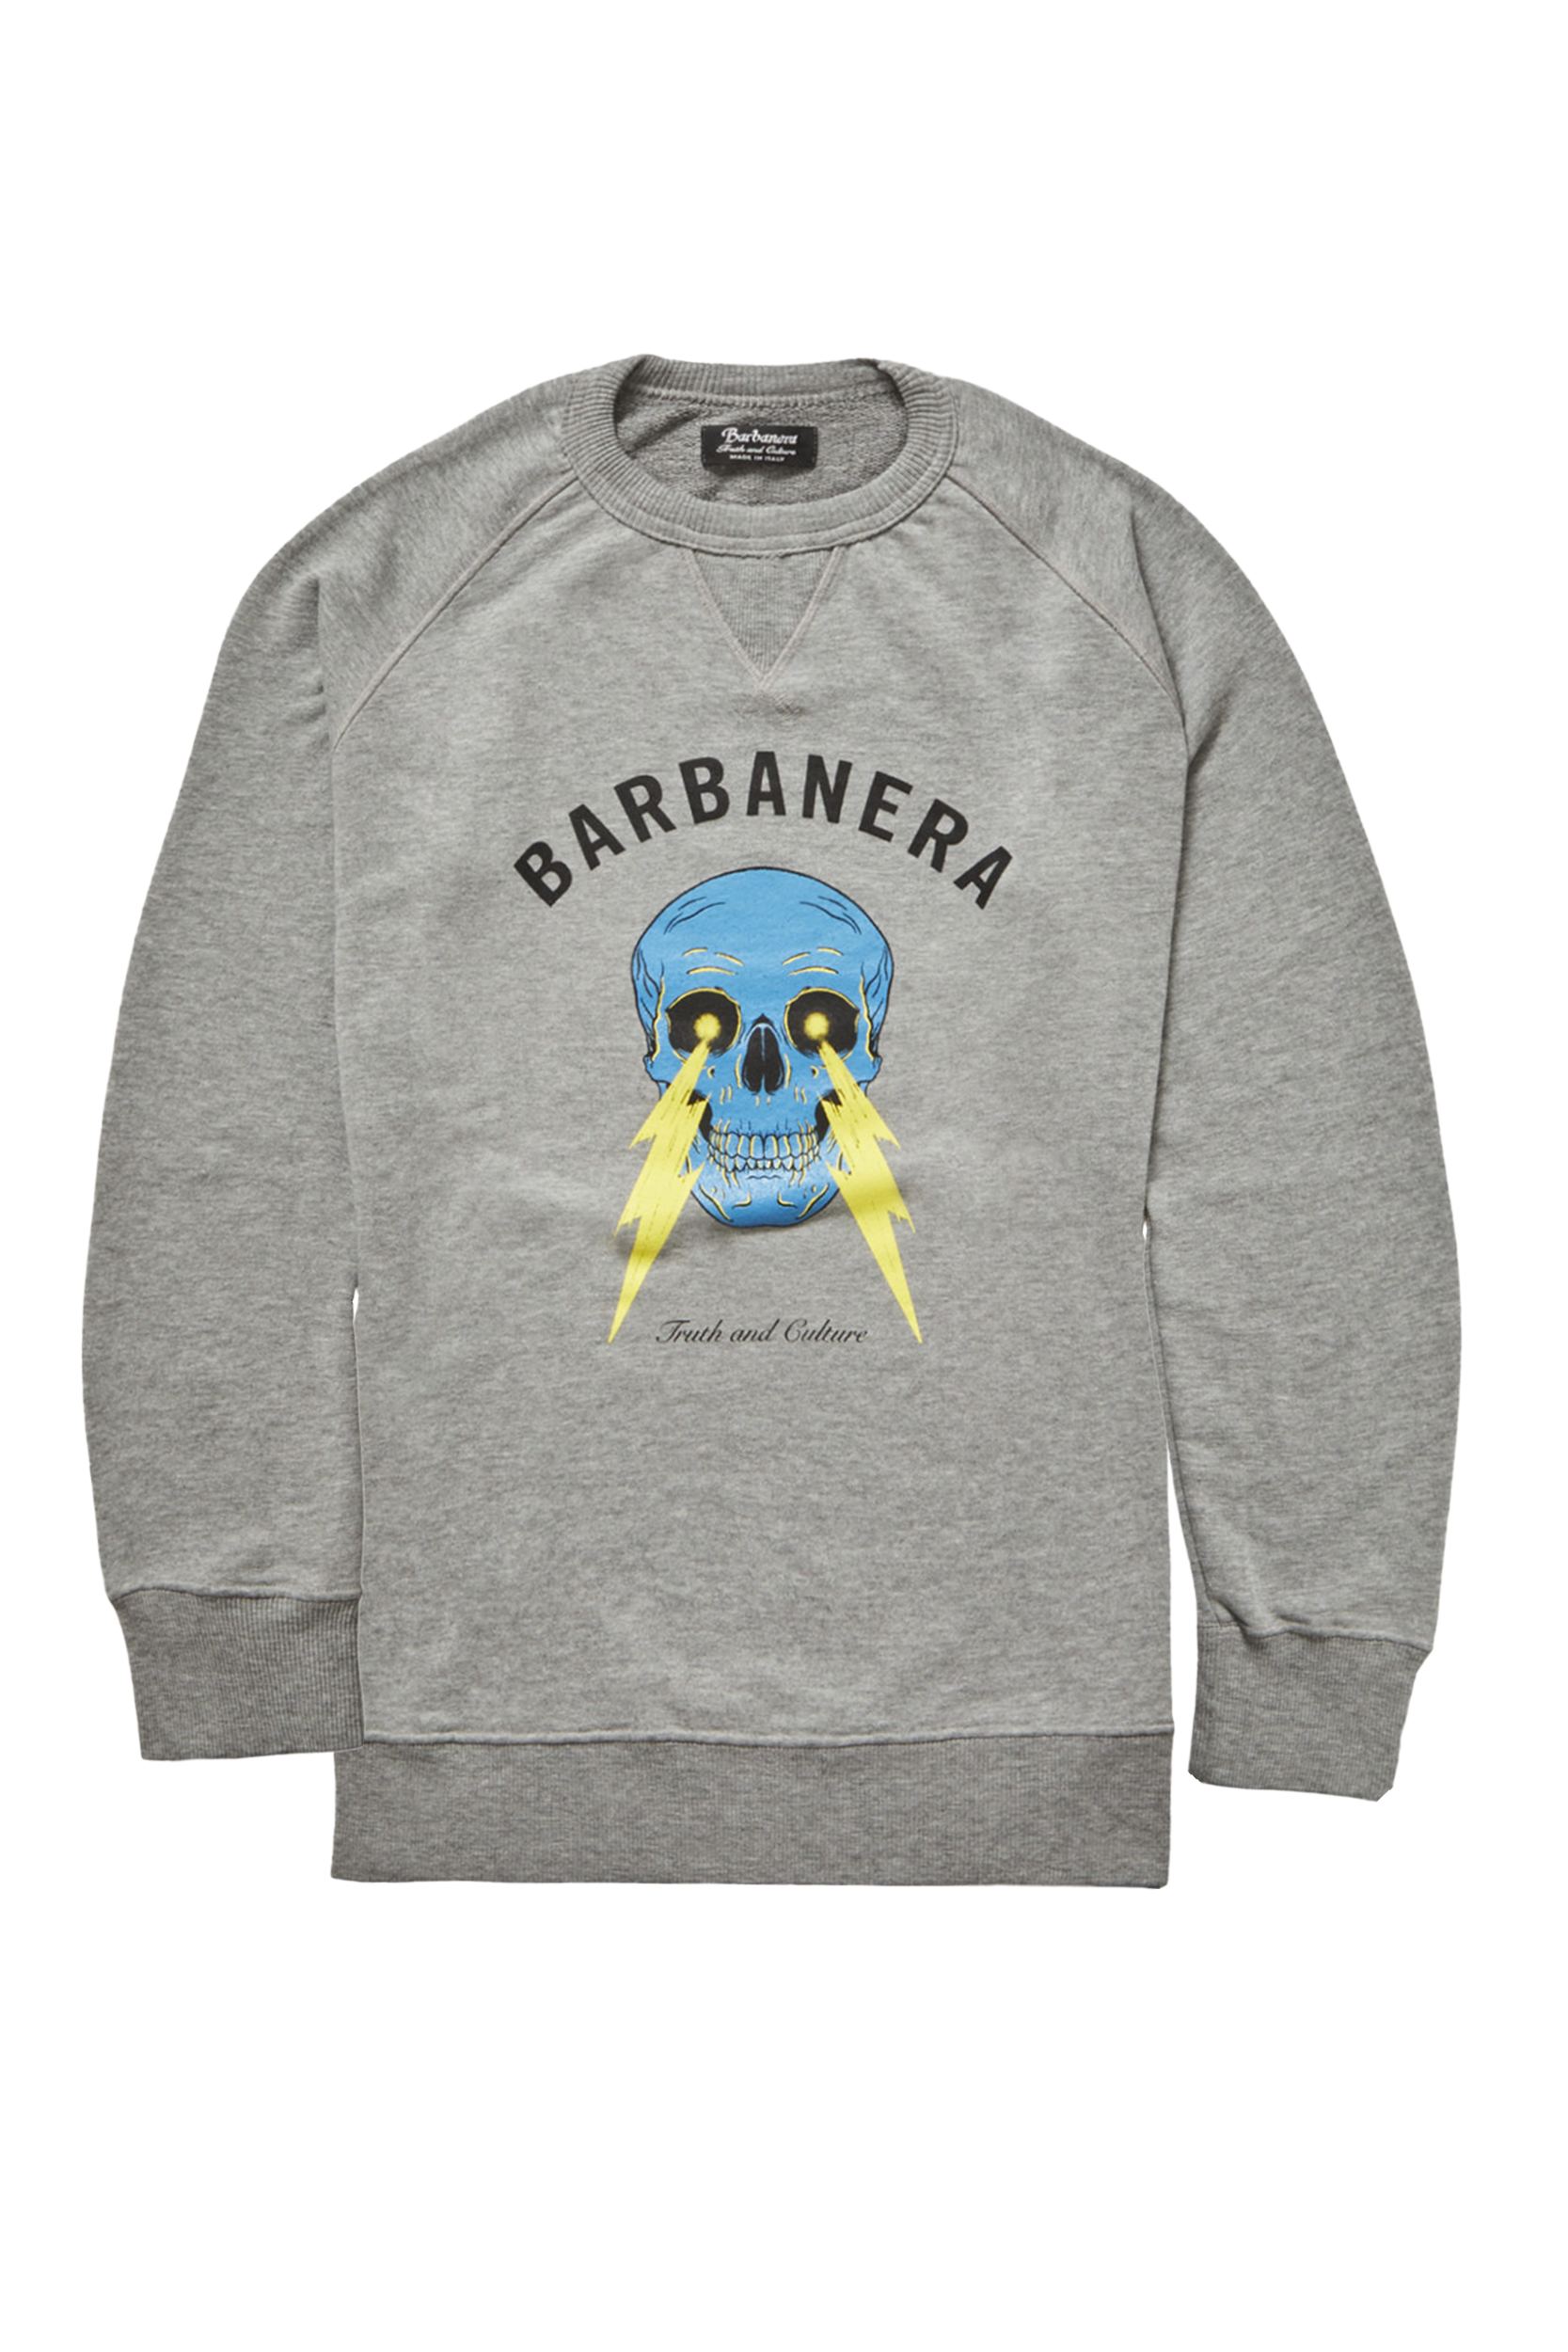 Grey And Cotton Barbanera Melange Sweatshirt Graphic Meroni Bolt Crew - Neck Skull Lightning